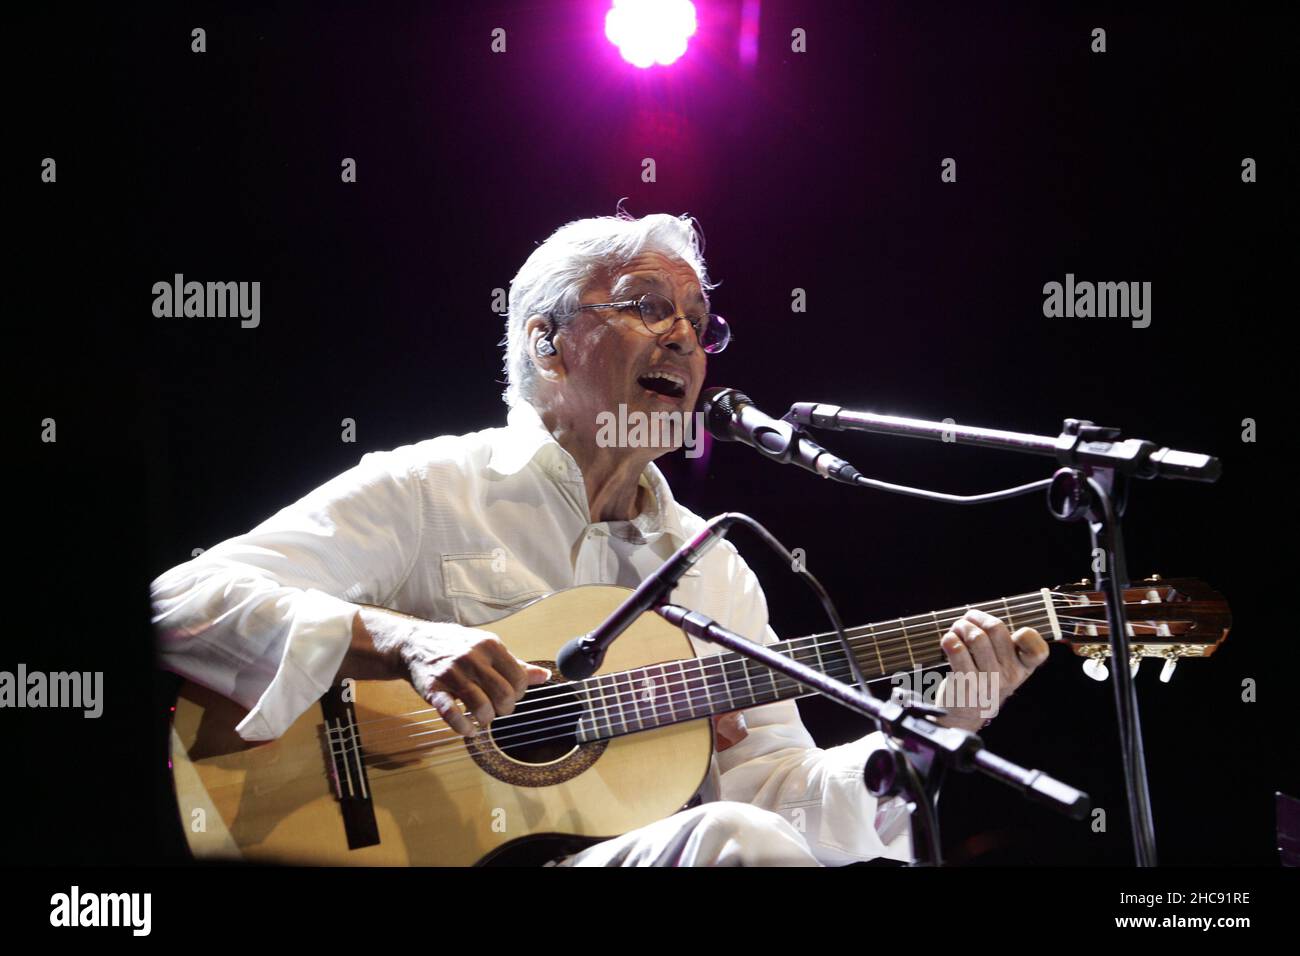 santo amaro, bahia, brazil - january 25, 2013: Singer Caetano Veloso during a performance in the city of Santo Amaro, Reconcavo da Bahia. Stock Photo